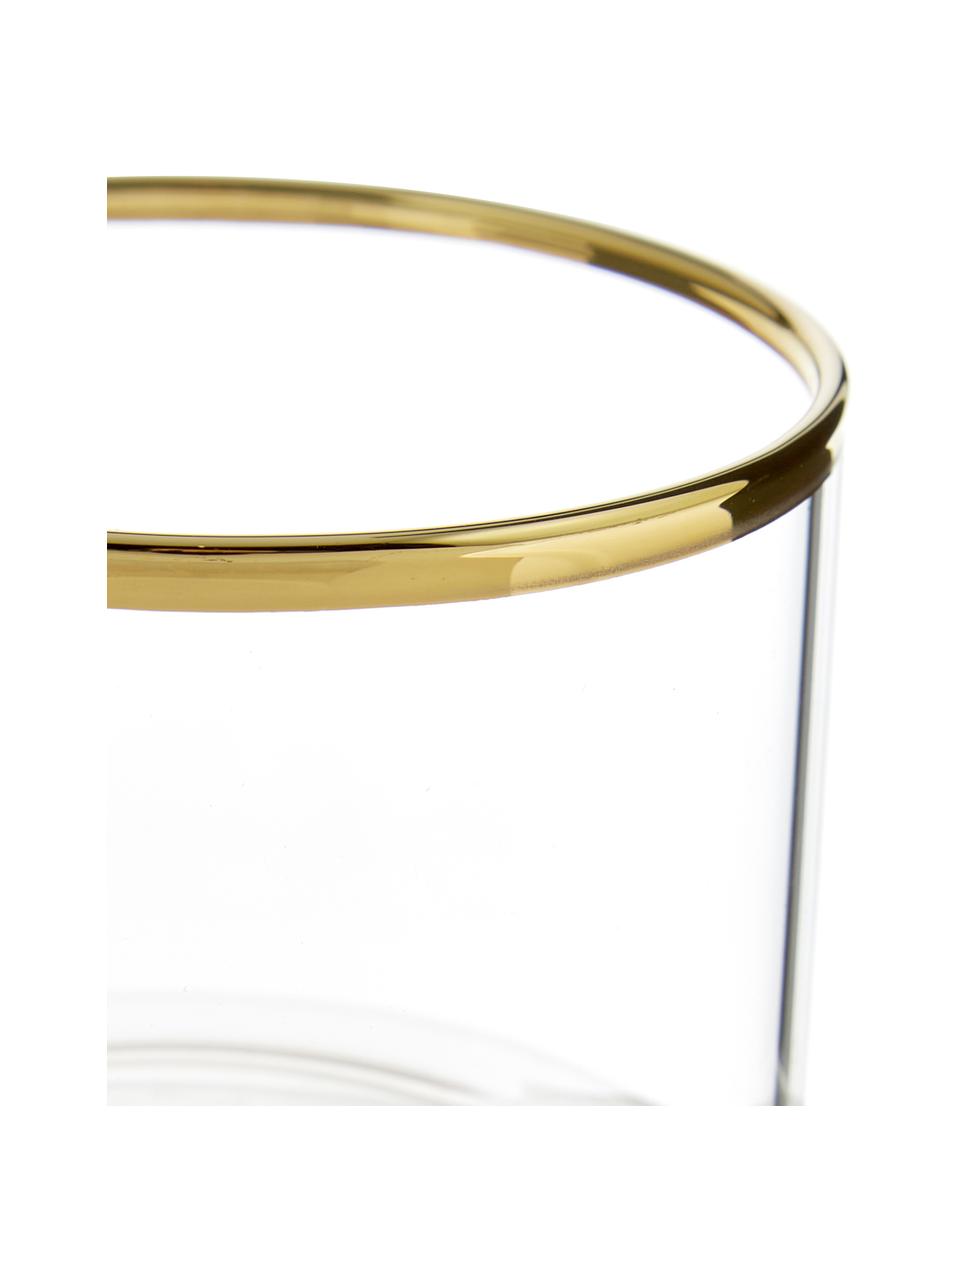 Waterglazen Boro van borosilicaatglas met goudkleurige rand, 6 stuks, Borosilicaatglas, Transparant, goudkleurig, Ø 8 x H 6 cm